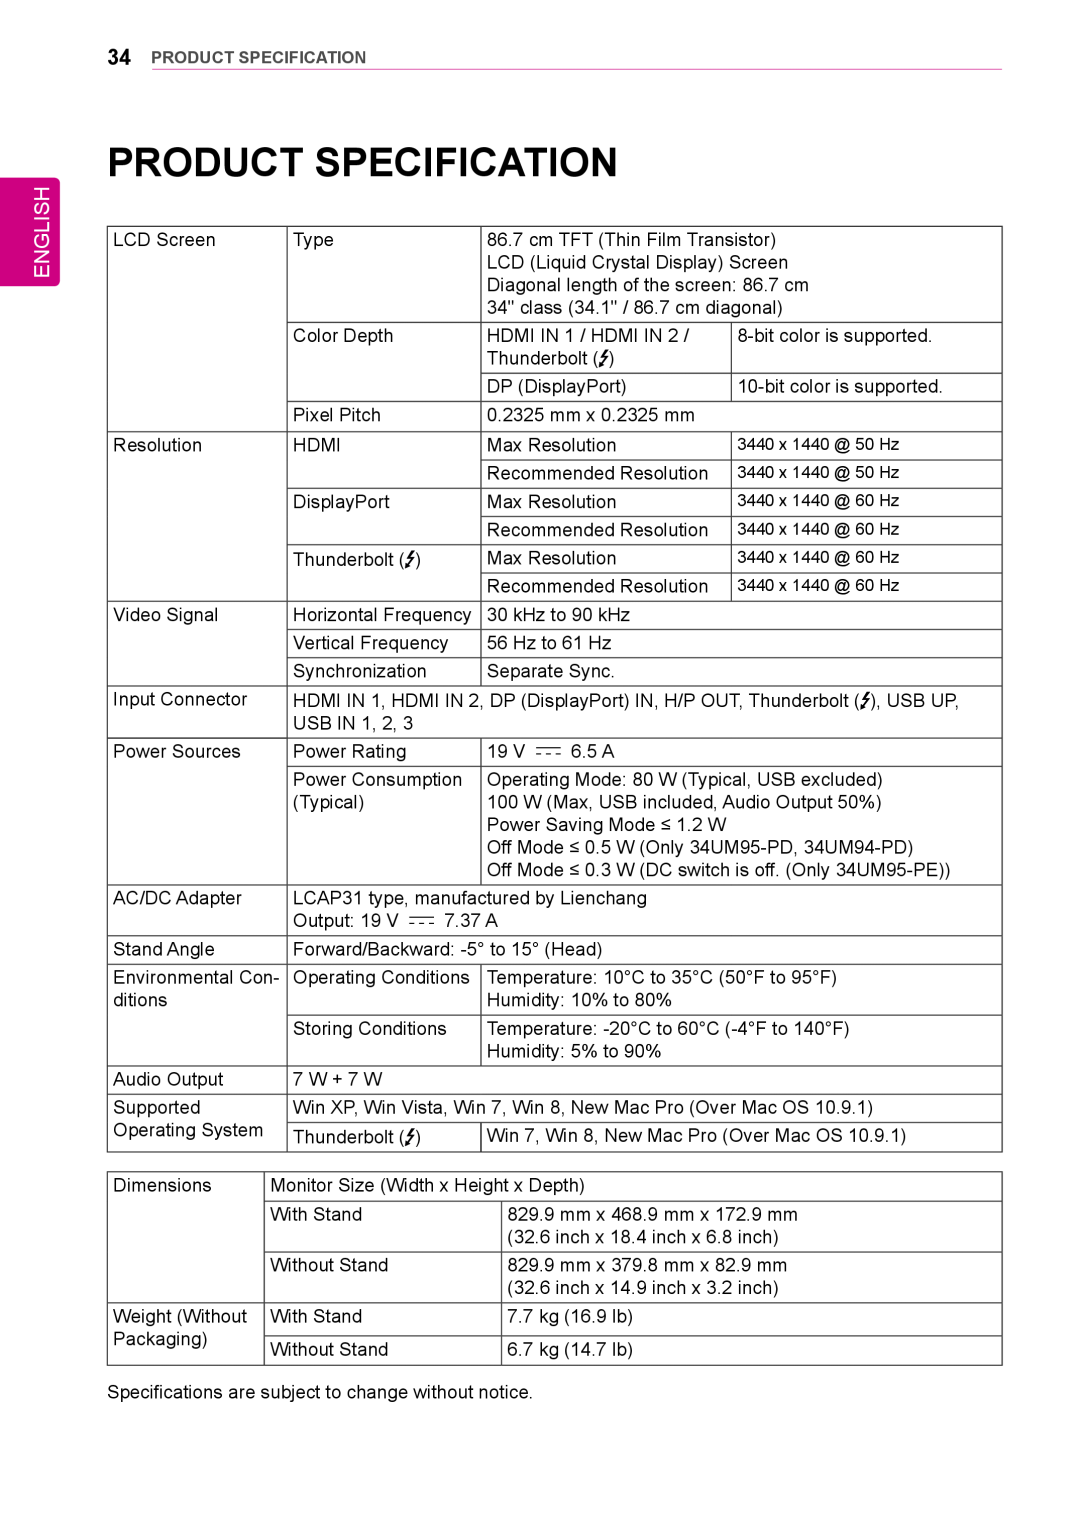 LG Electronics 34UM95-PD/ 34UM95-PE / 34UM94-PD owner manual Product Specification, English 